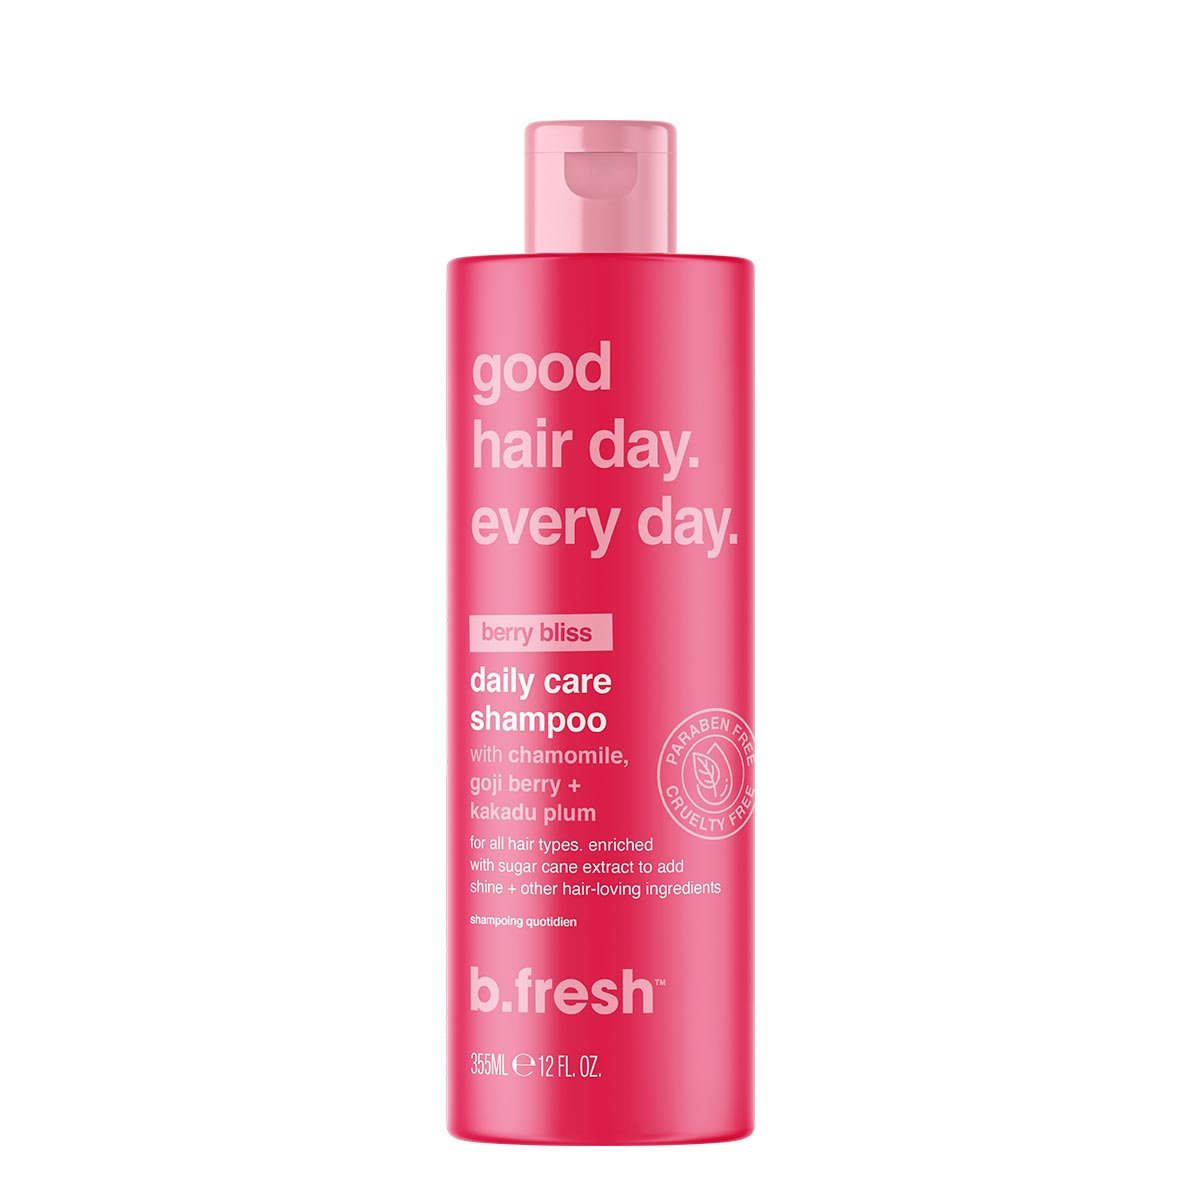 b.fresh Good Hair Day. Every Day. Daily Care Shampoo 355 ml